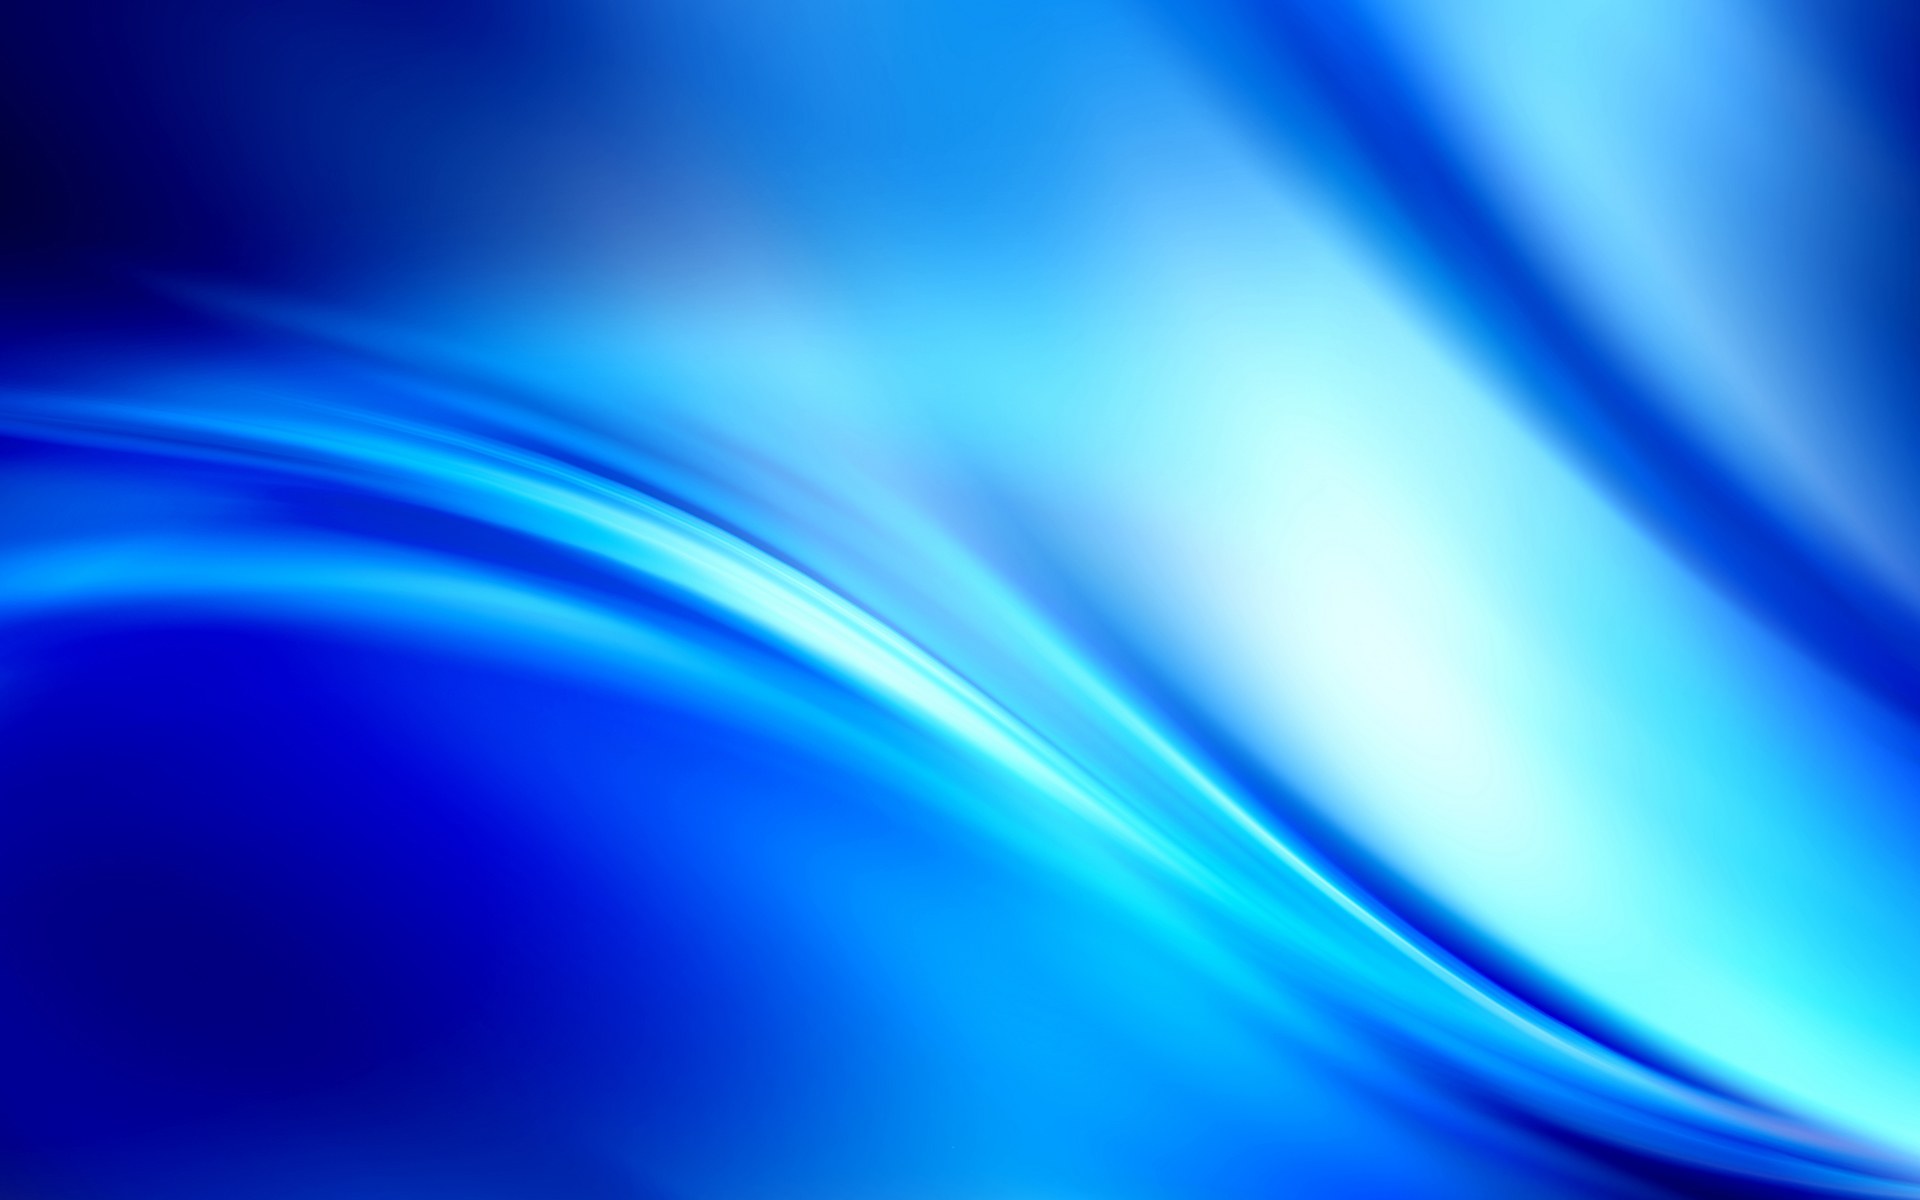 fond d'écran abstrait bleu,bleu,bleu électrique,aqua,bleu cobalt,lumière